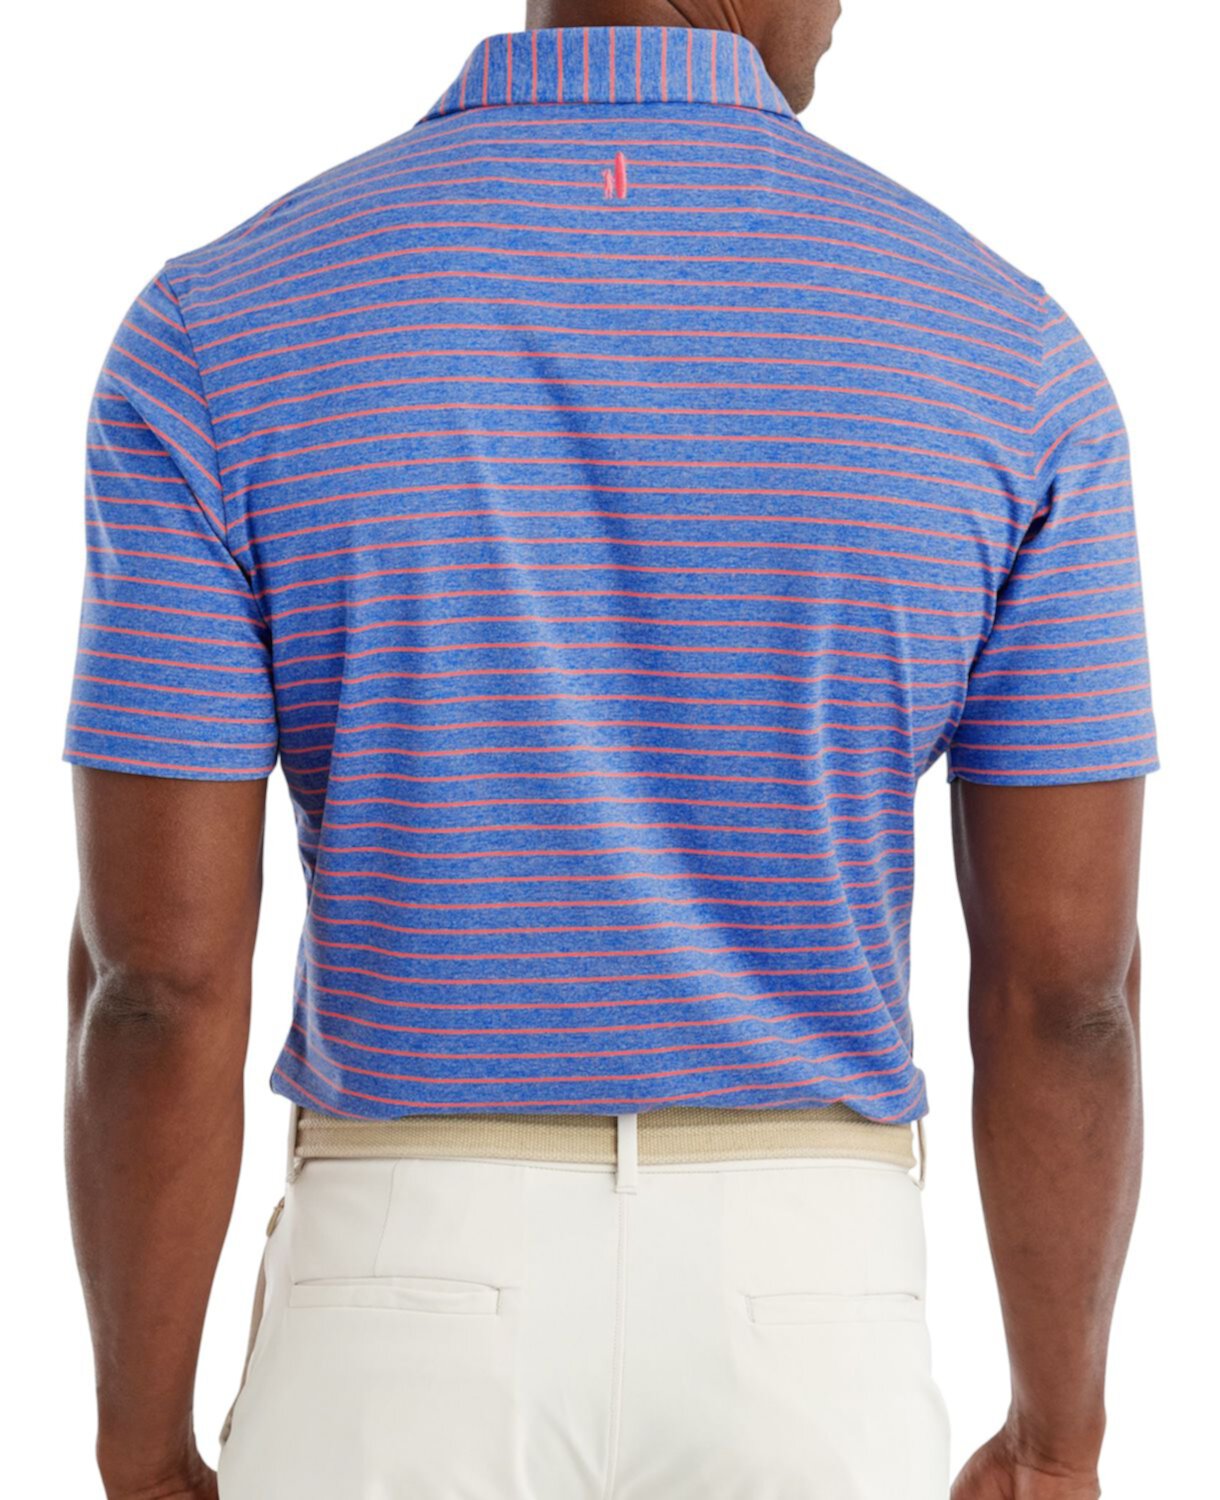 Поло Nash Polo Shirt 2021 (XL). Полосатая рубашка us Polo.